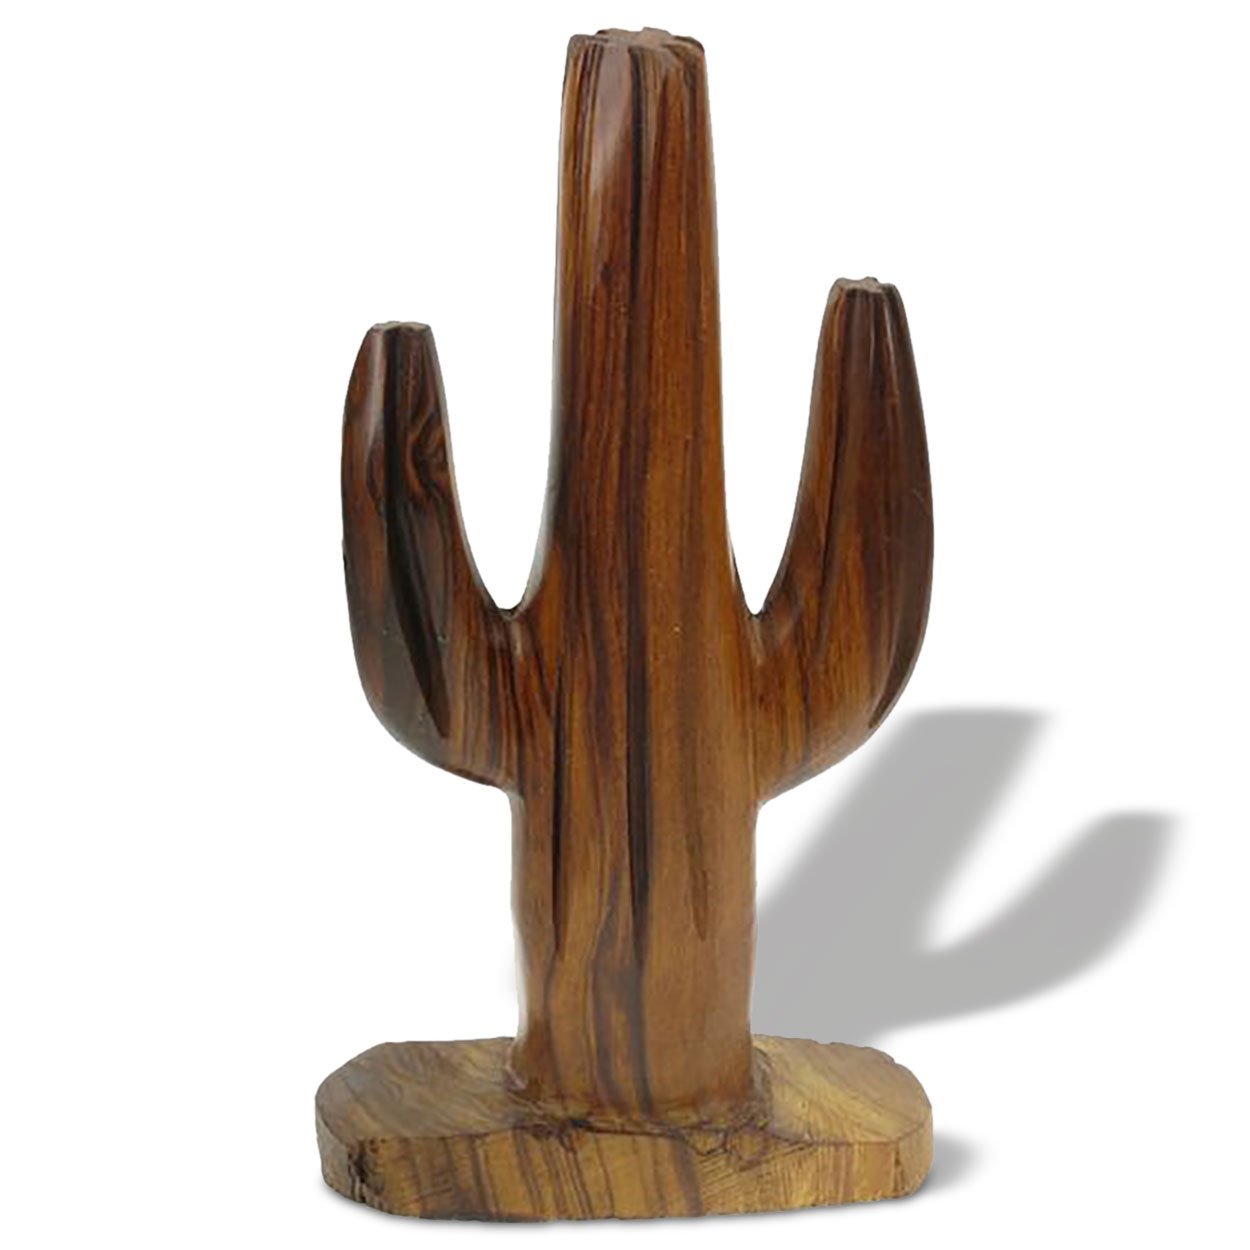 172155 - 9in Tall Saguaro Cactus Ironwood Carving